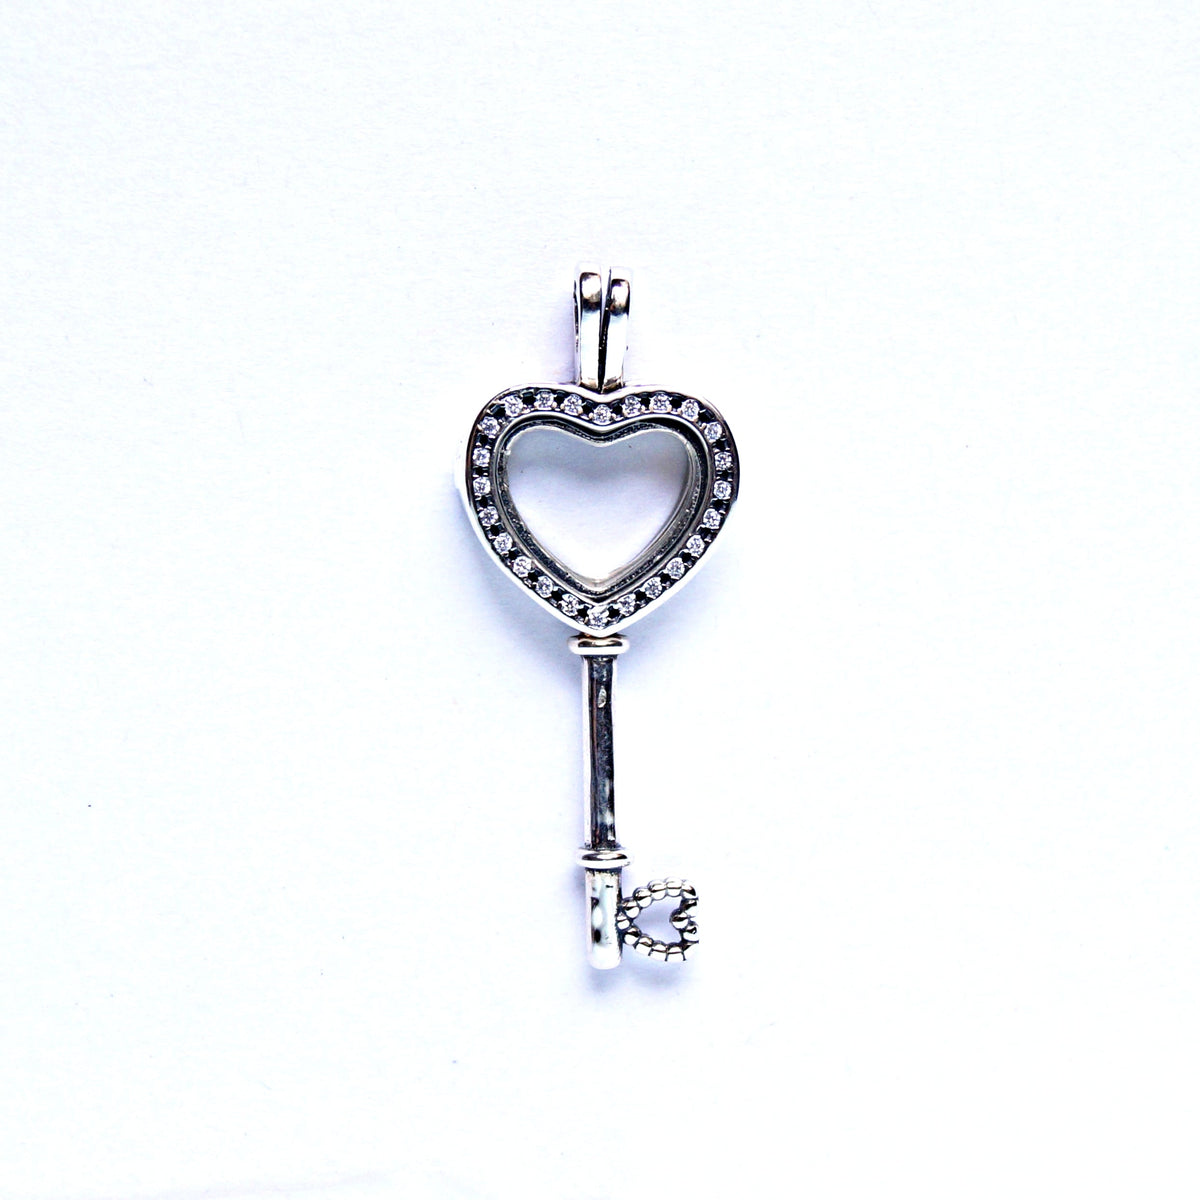 The Heart Key Glass Locket Pendant (Charm/Photo Holder)